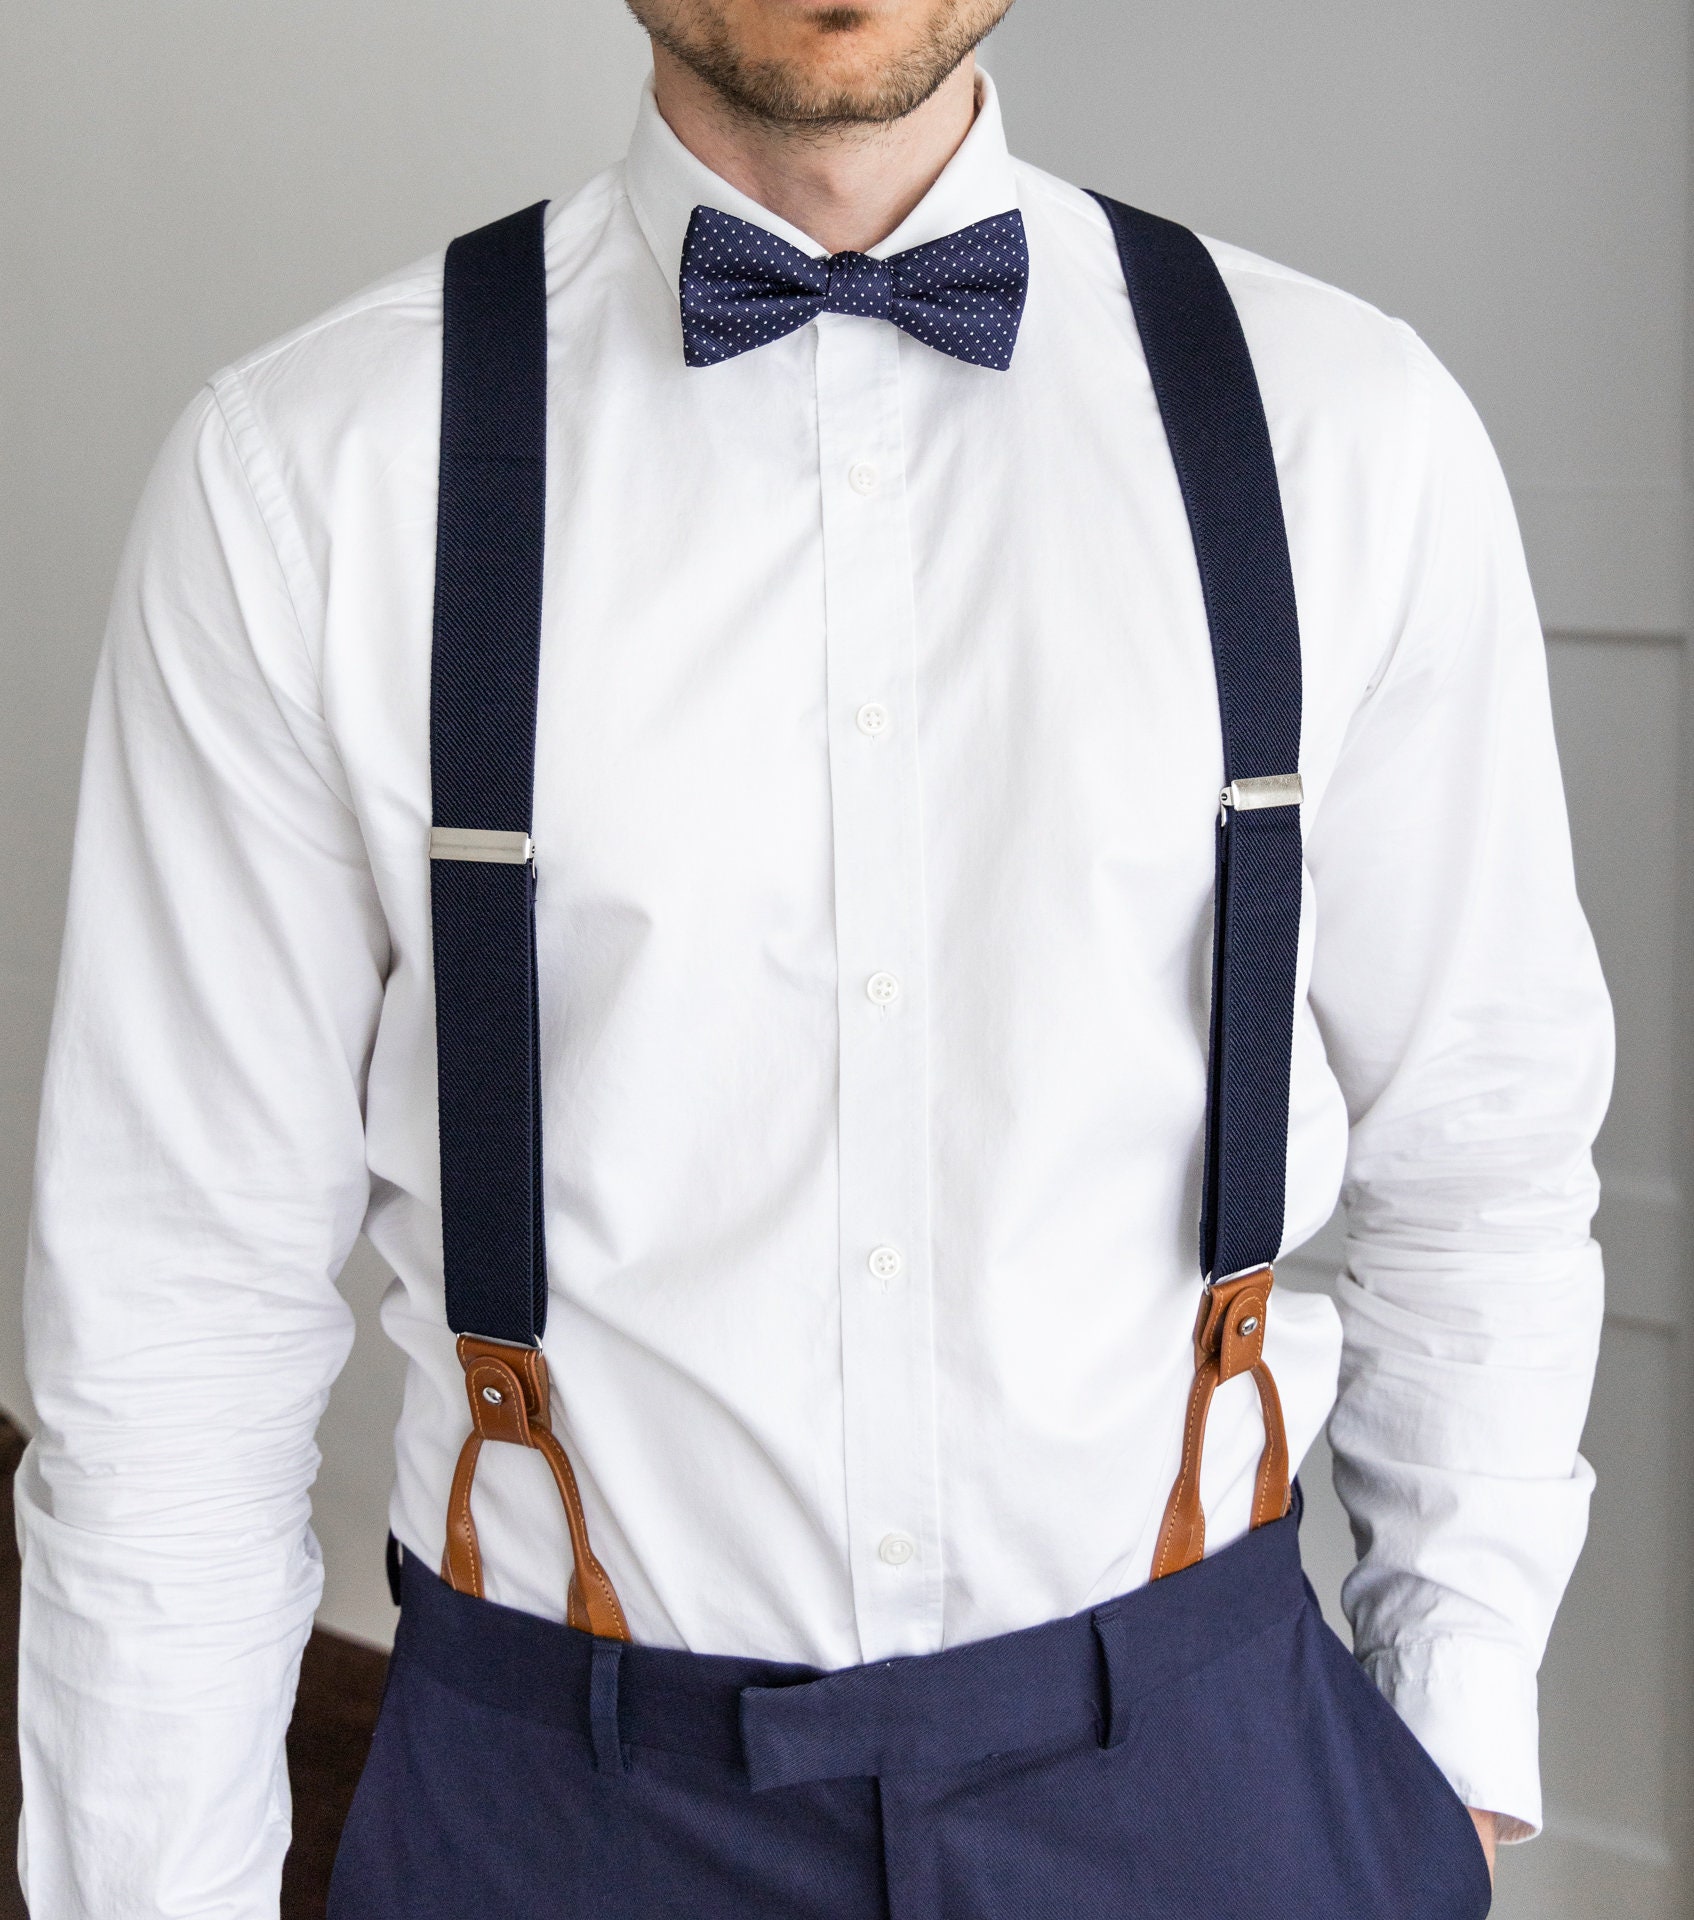 Navy Blue Suspenders for Men, Brown Button Suspenders, Wedding Suspenders  for Groom Groomsmen, Loop Suspenders, Clip Suspenders 